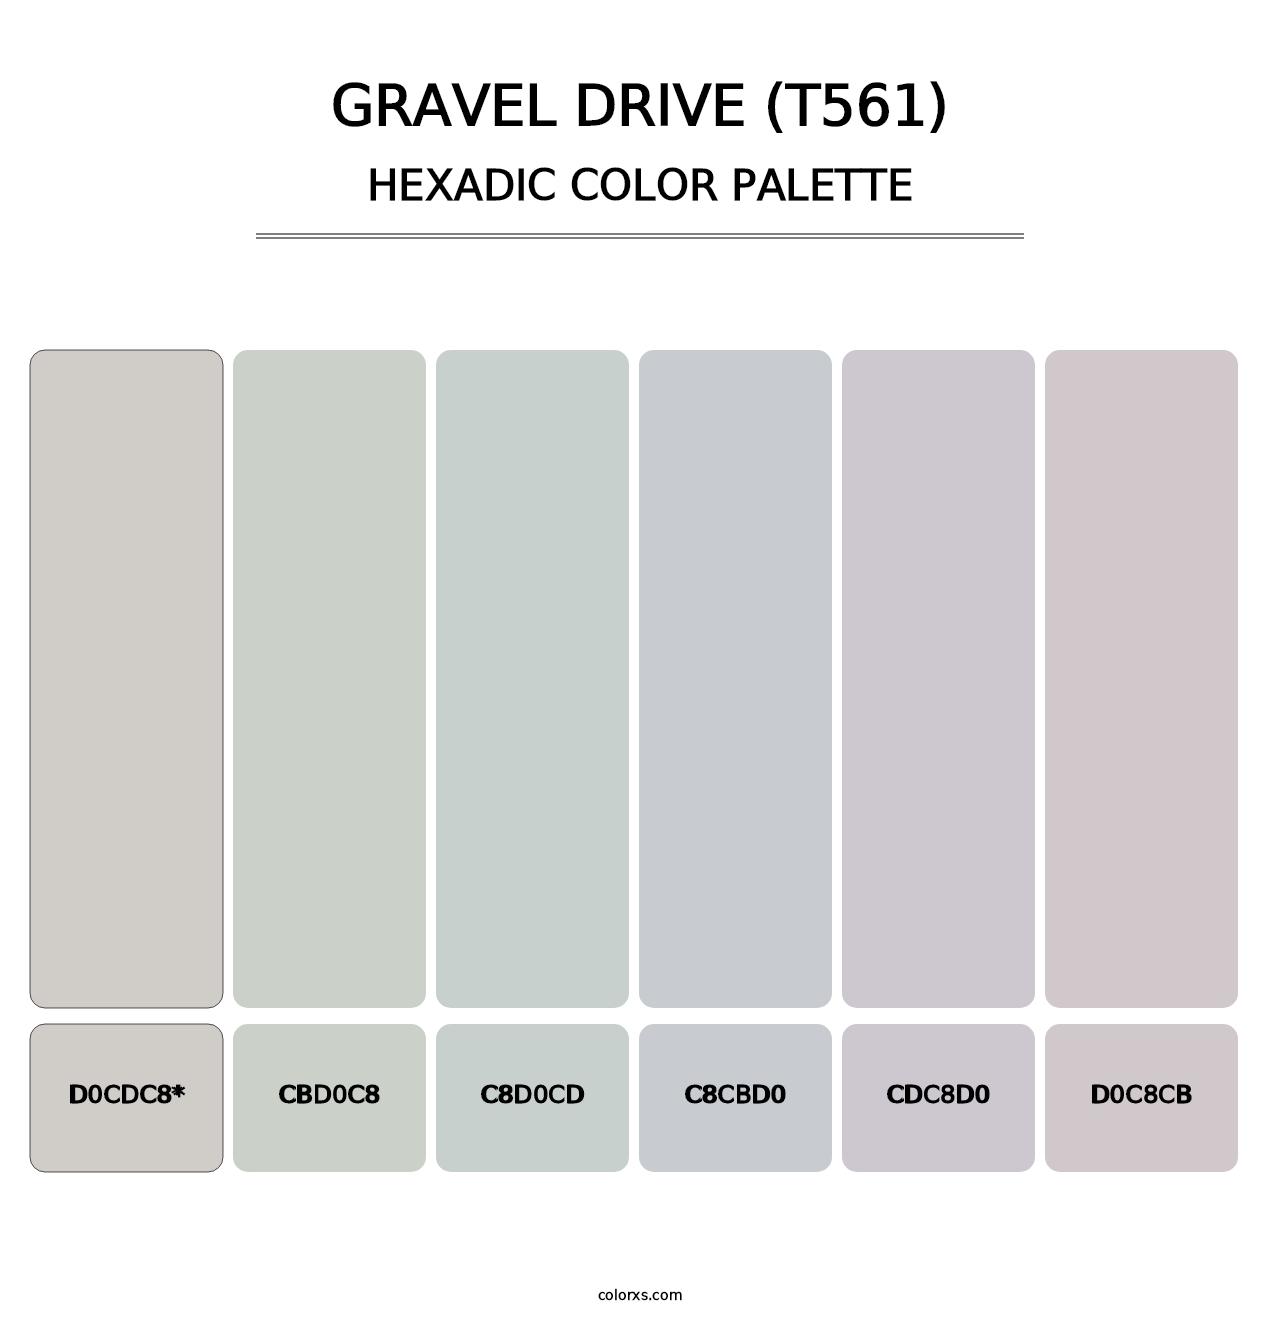 Gravel Drive (T561) - Hexadic Color Palette